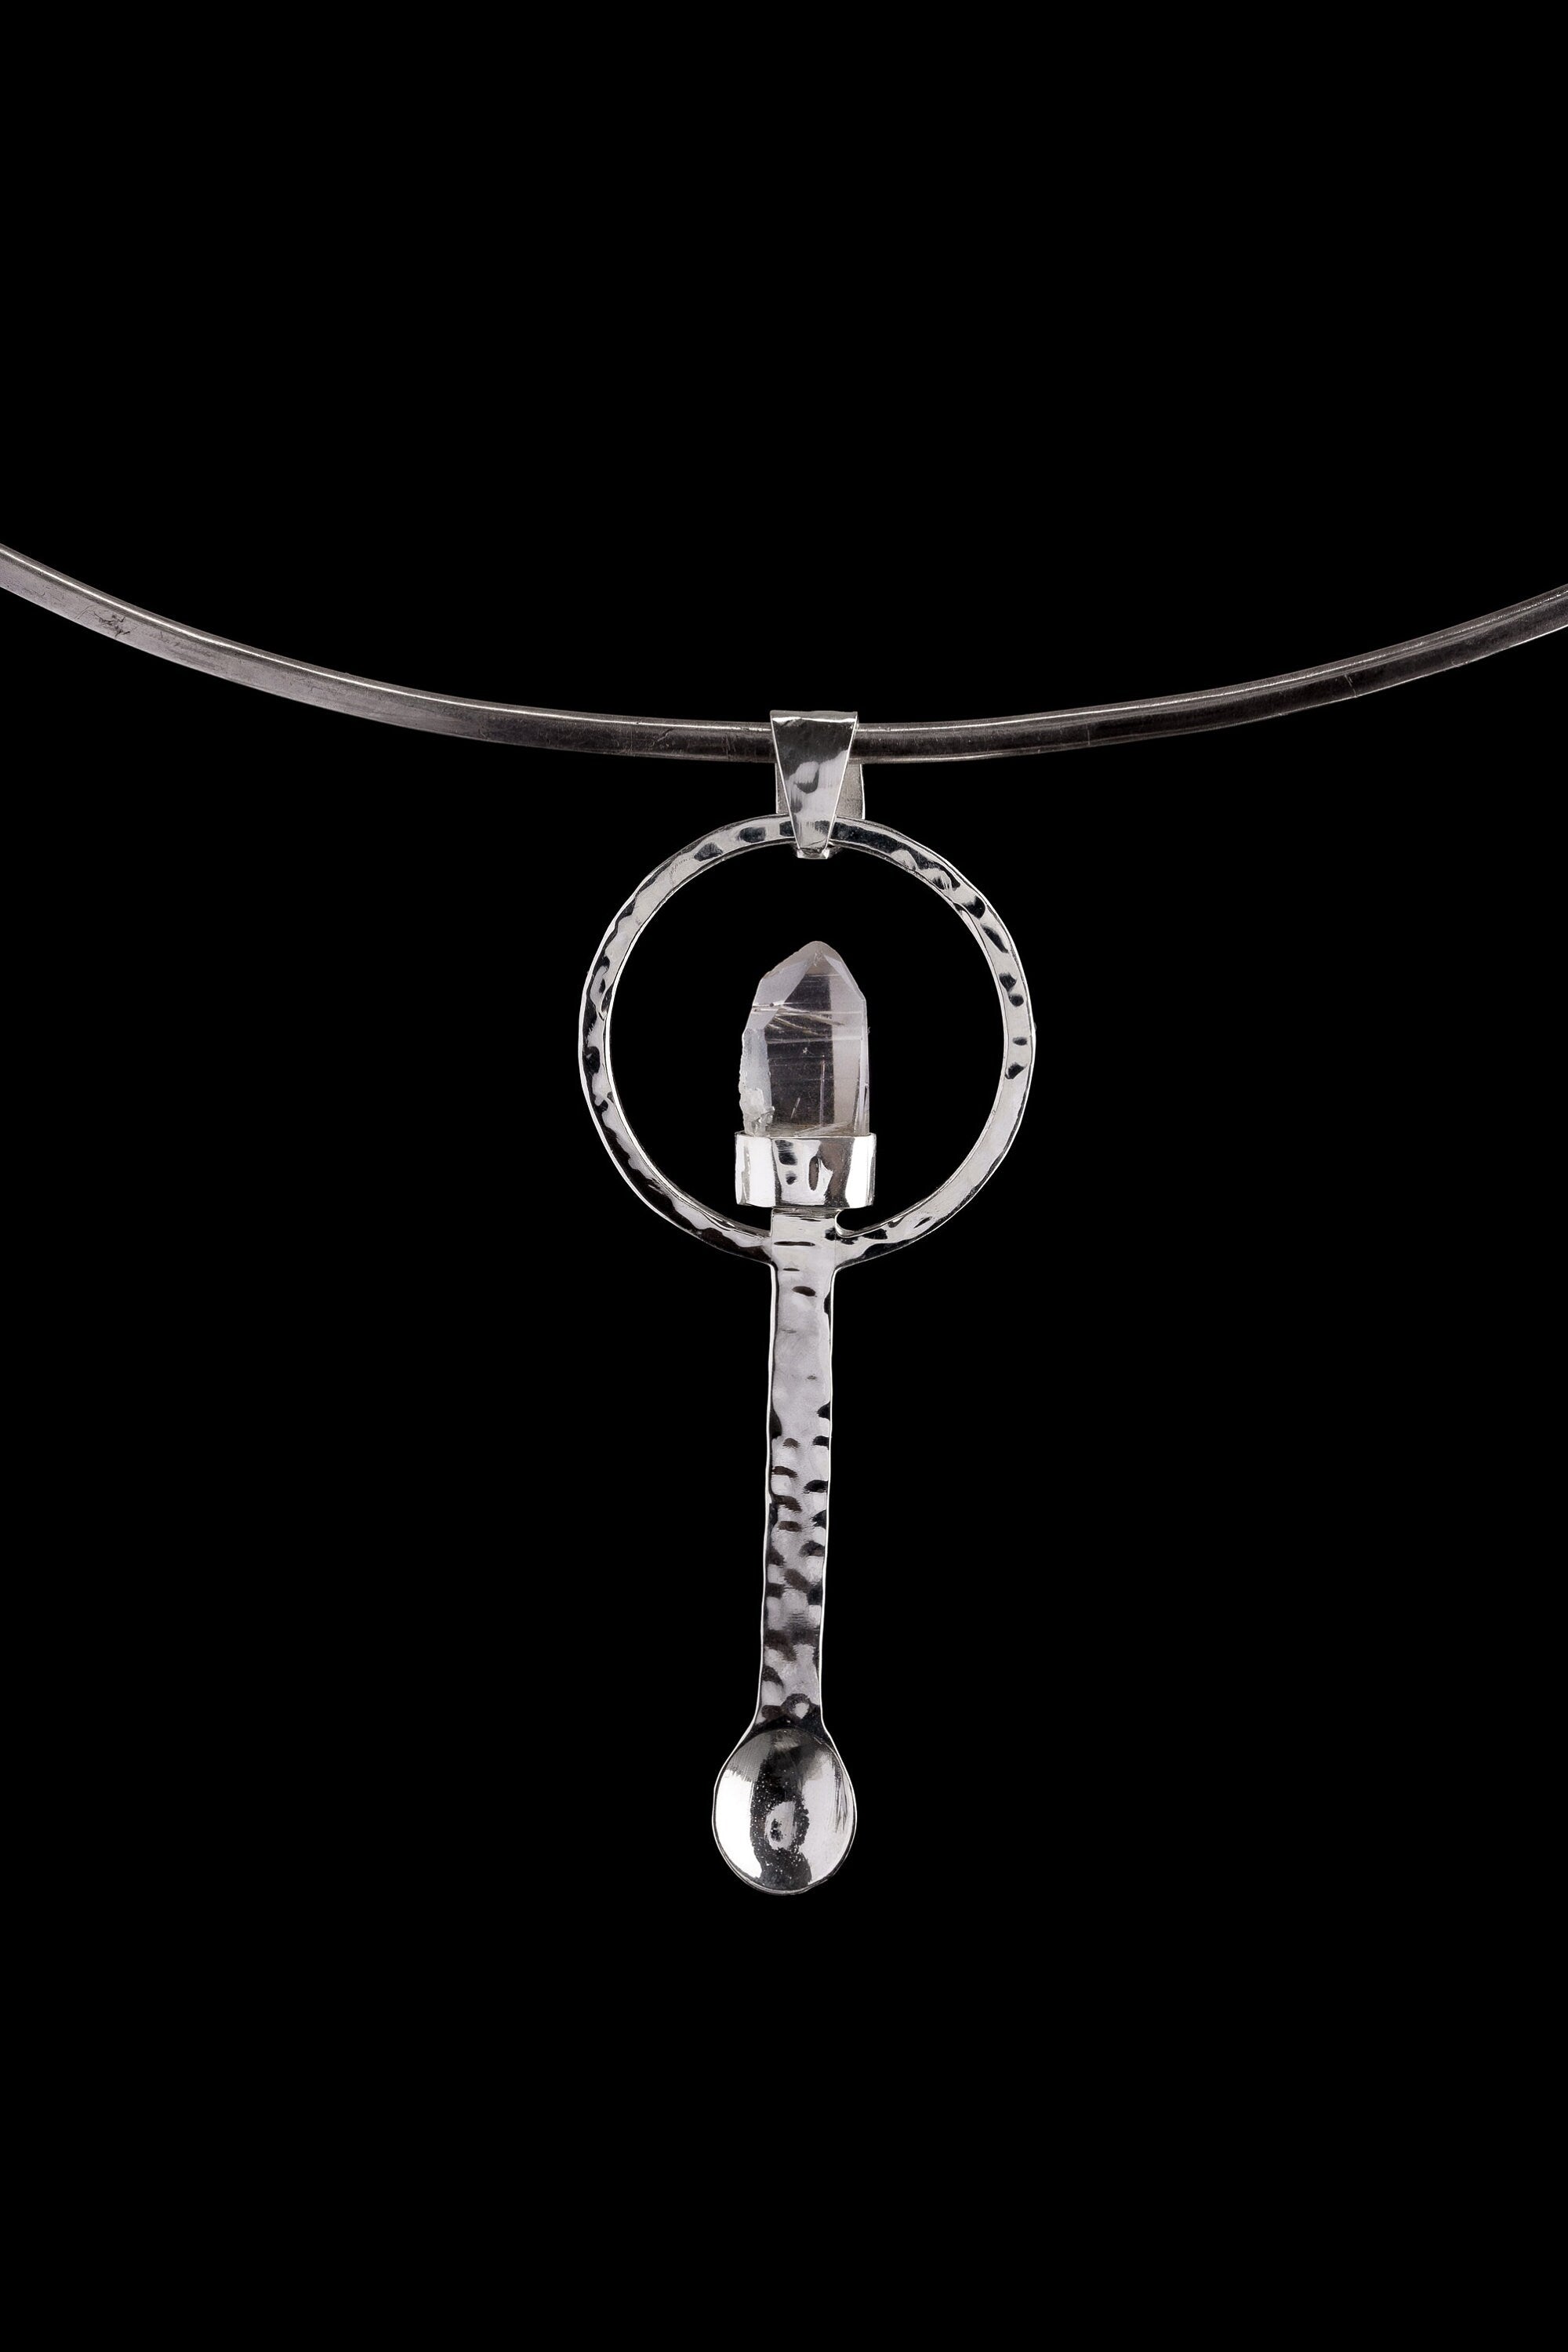 Spice / Ceremonial Spoon - Natural Himalayan rutile Quartz Point - 925 Cast Silver - Unique Hammer Textured - Crystal Pendant Necklace -